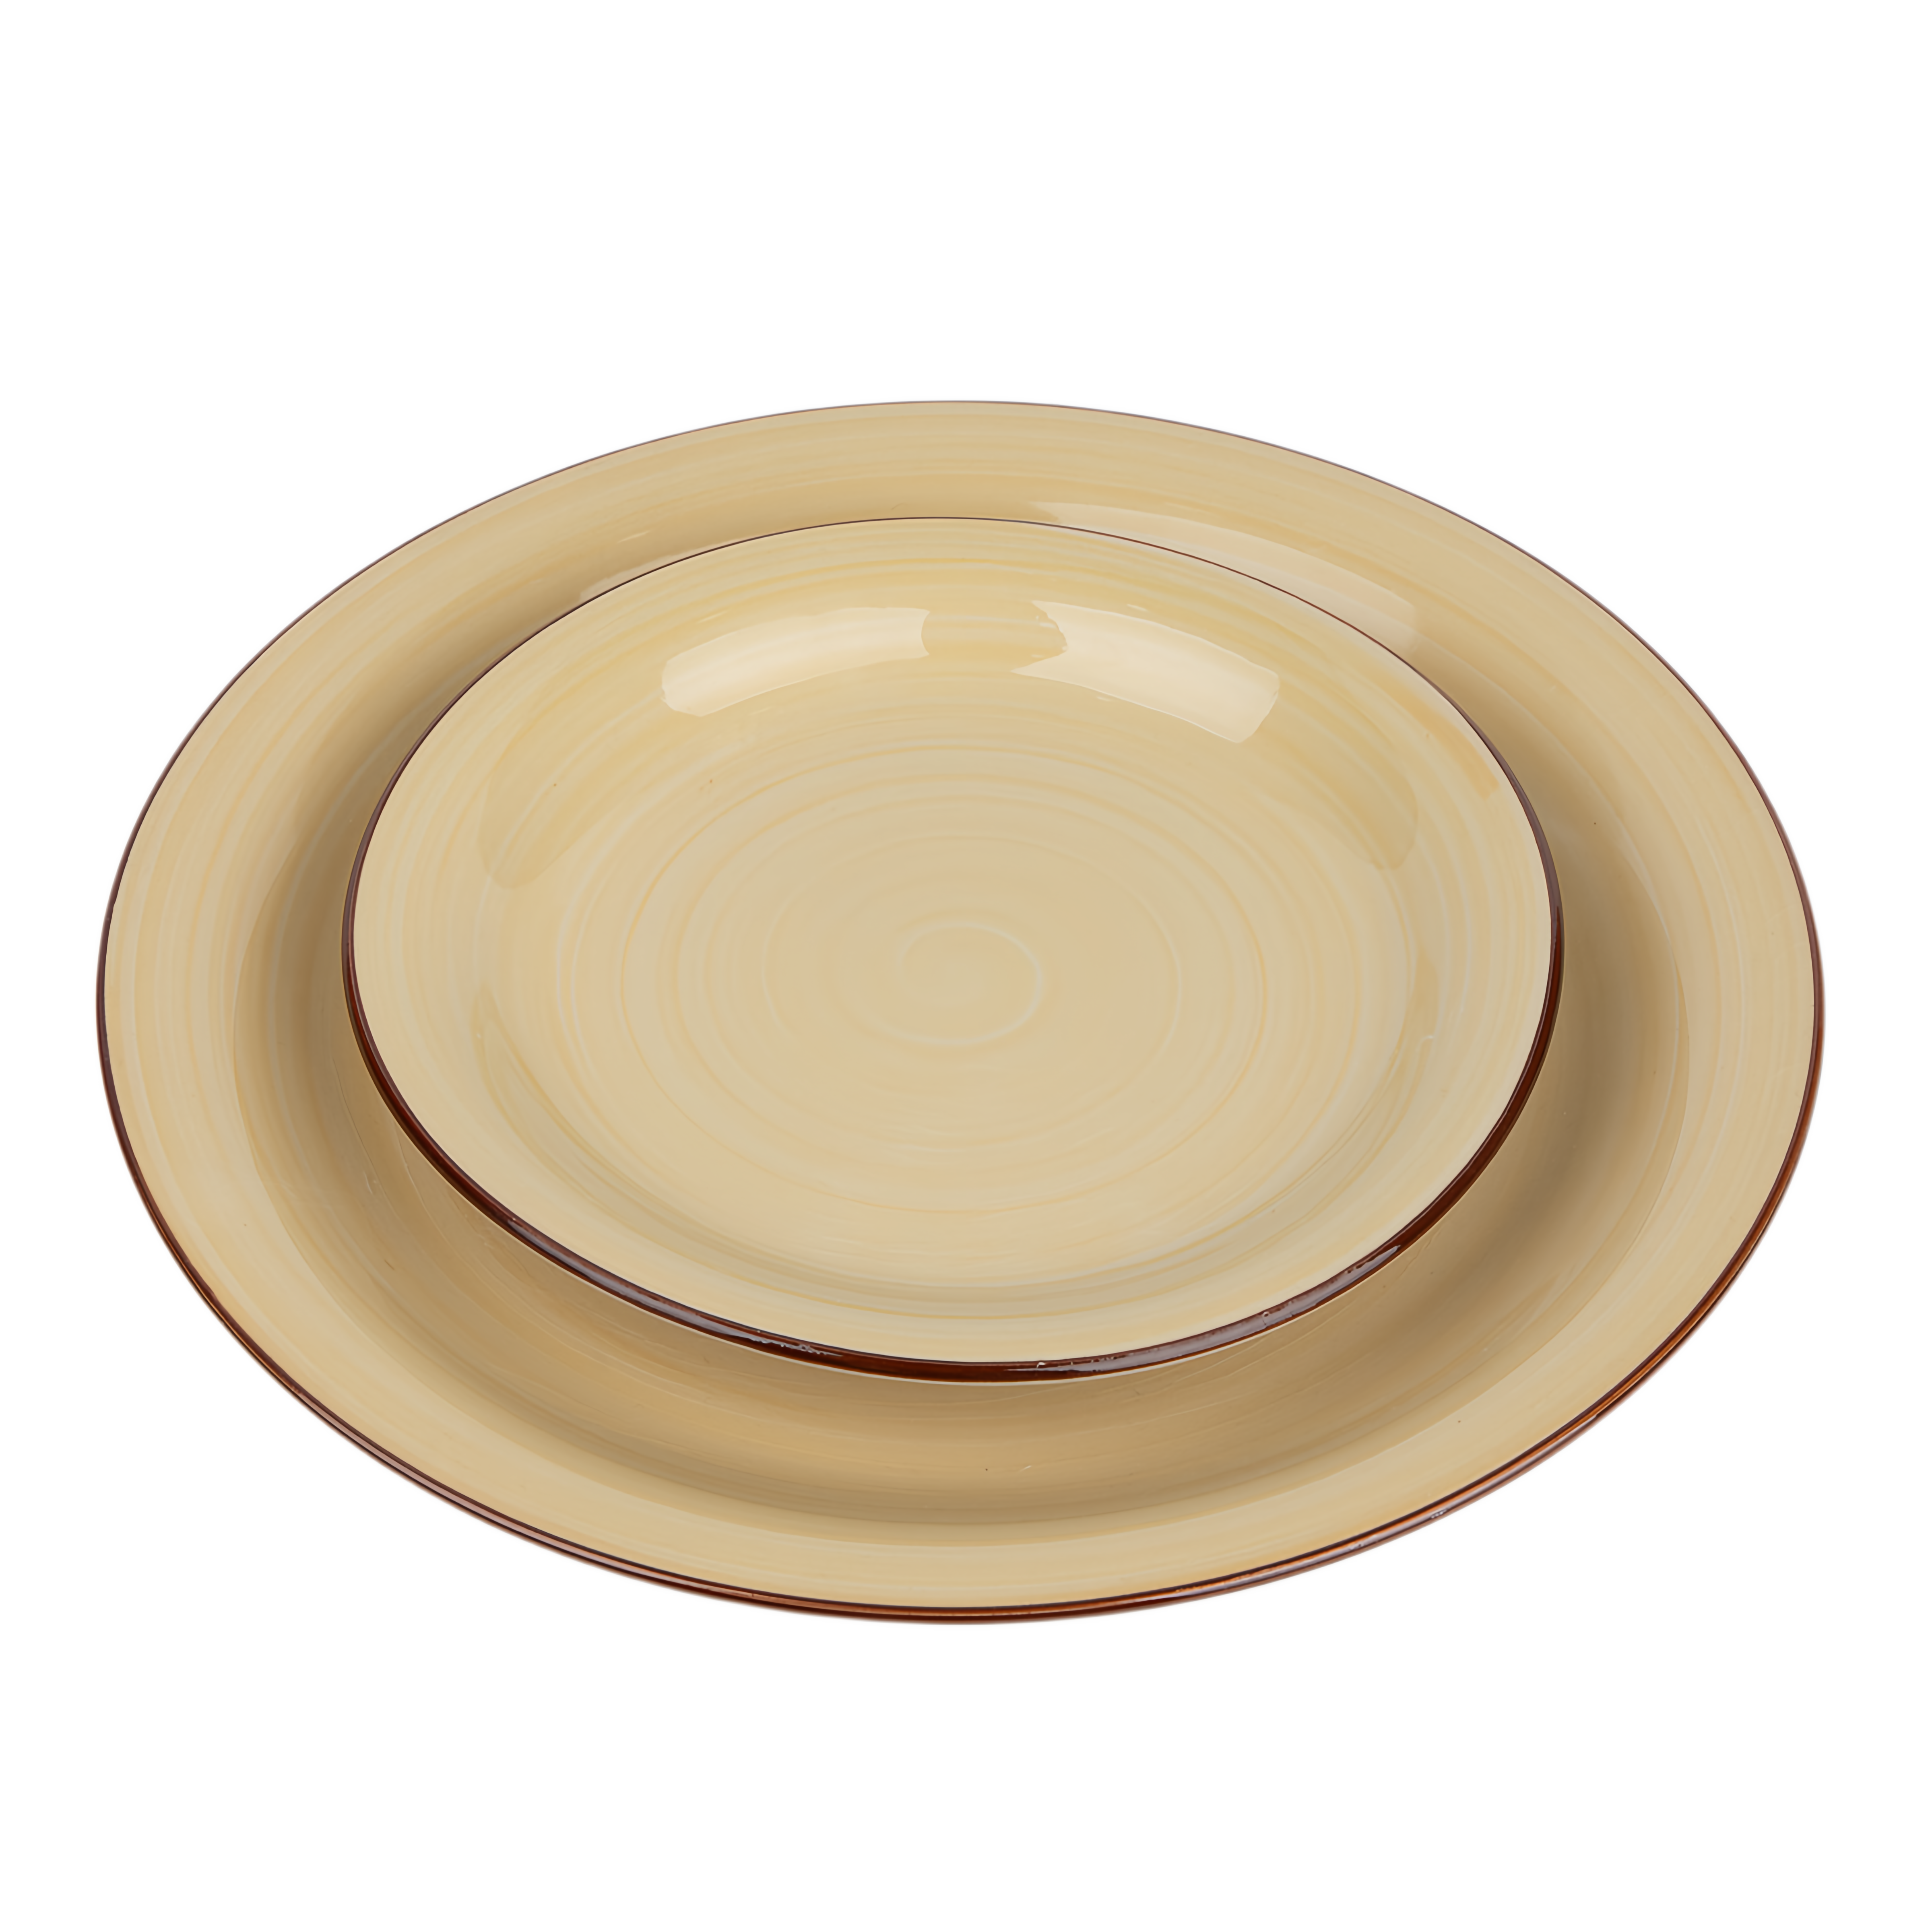 qinge Vintage Ceramic Round Plate Set of Two